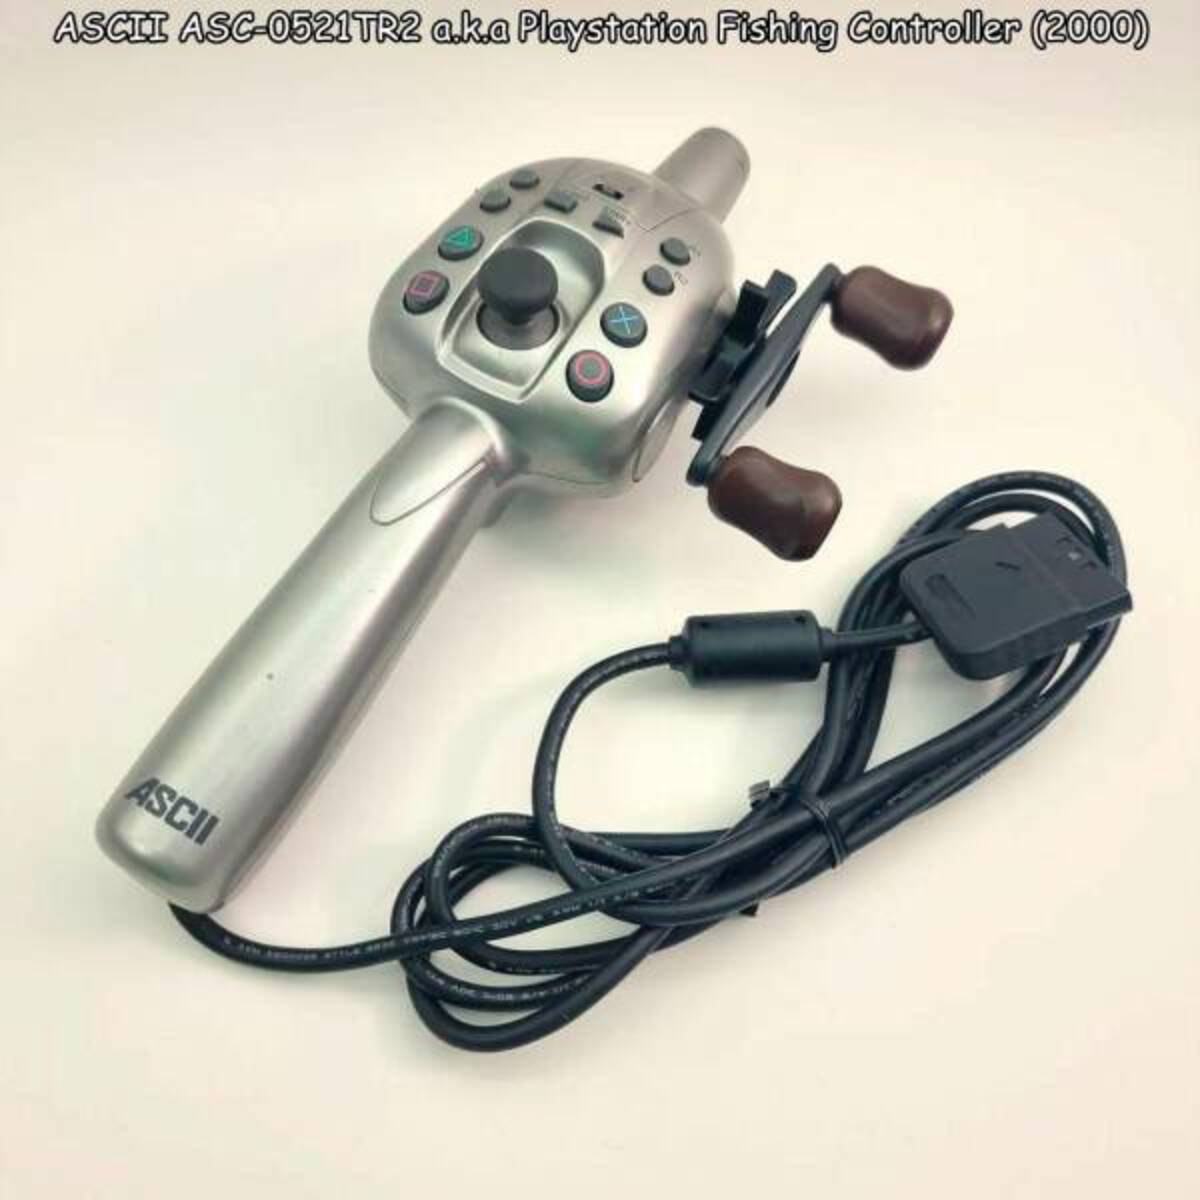 headphones - Ascii Asc0521TR2 a.k.a Playstation Fishing Controller 2000 Ascii